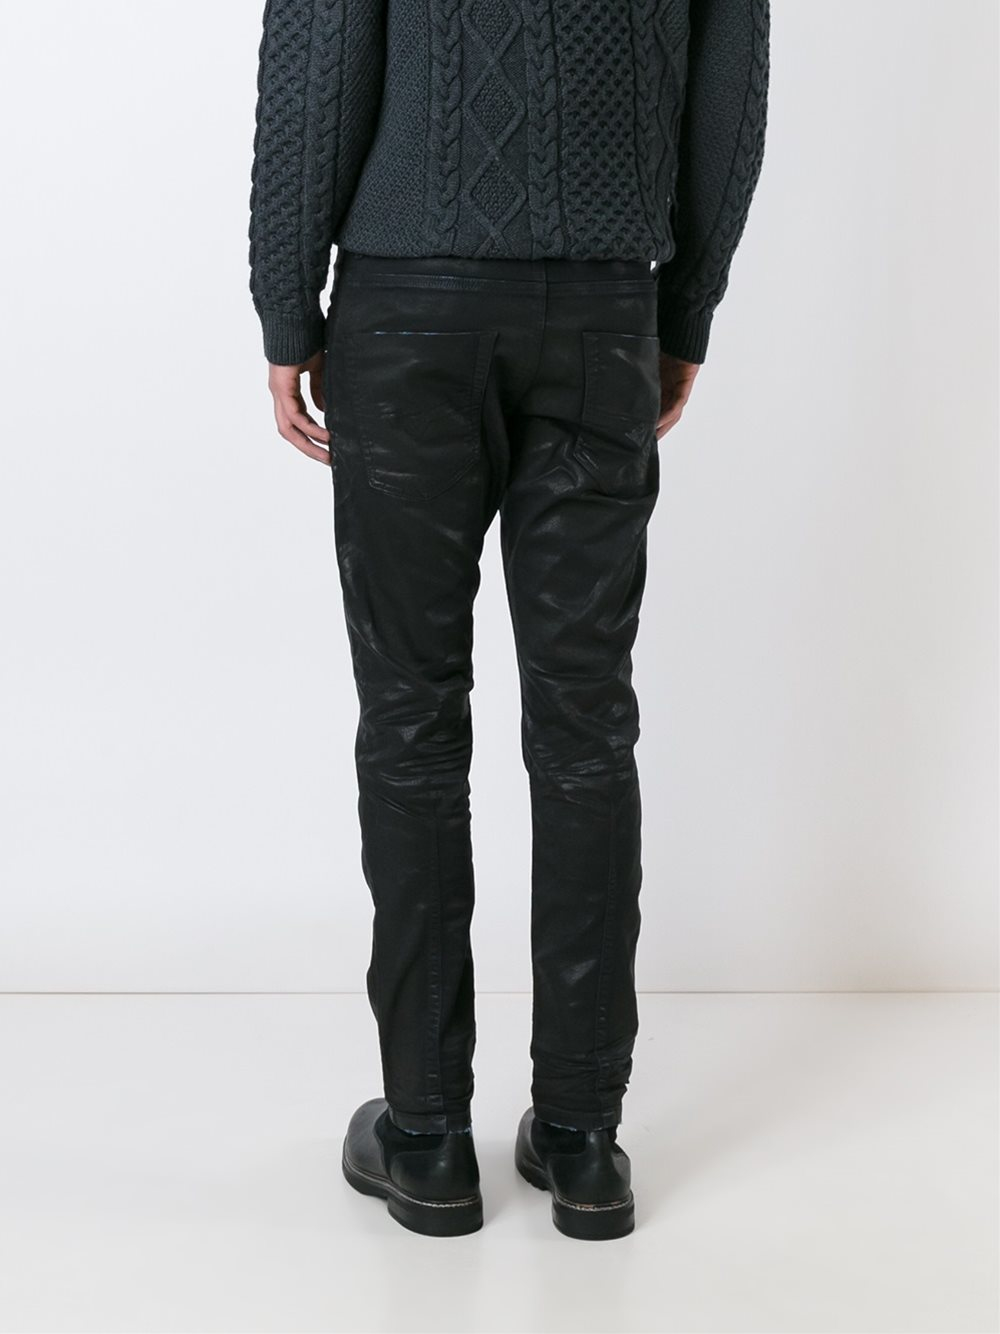 Lyst - DIESEL Wax Effect Tapered Jeans in Black for Men